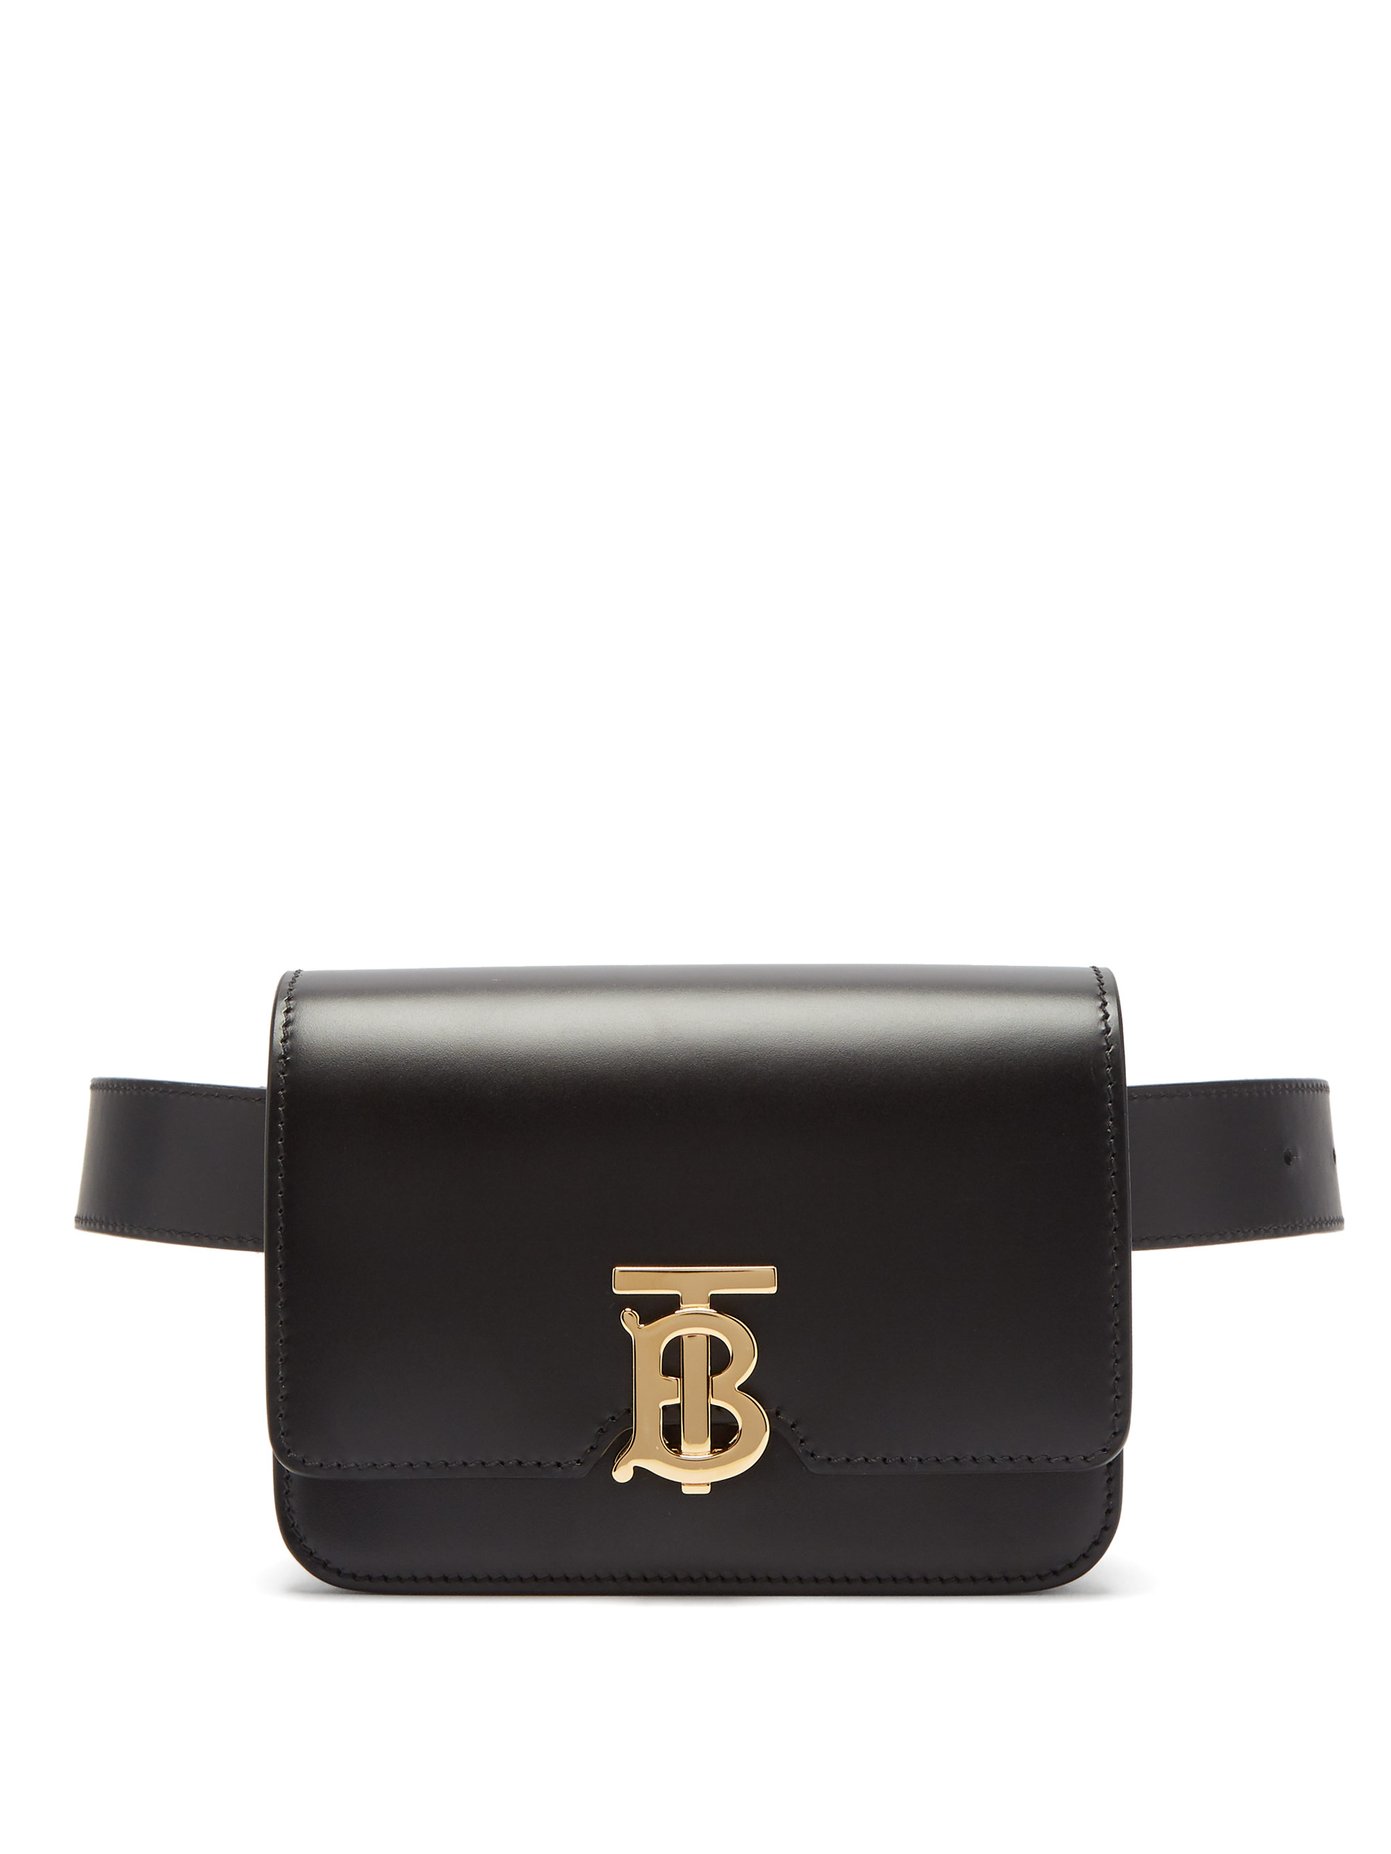 burberry monogram belt bag